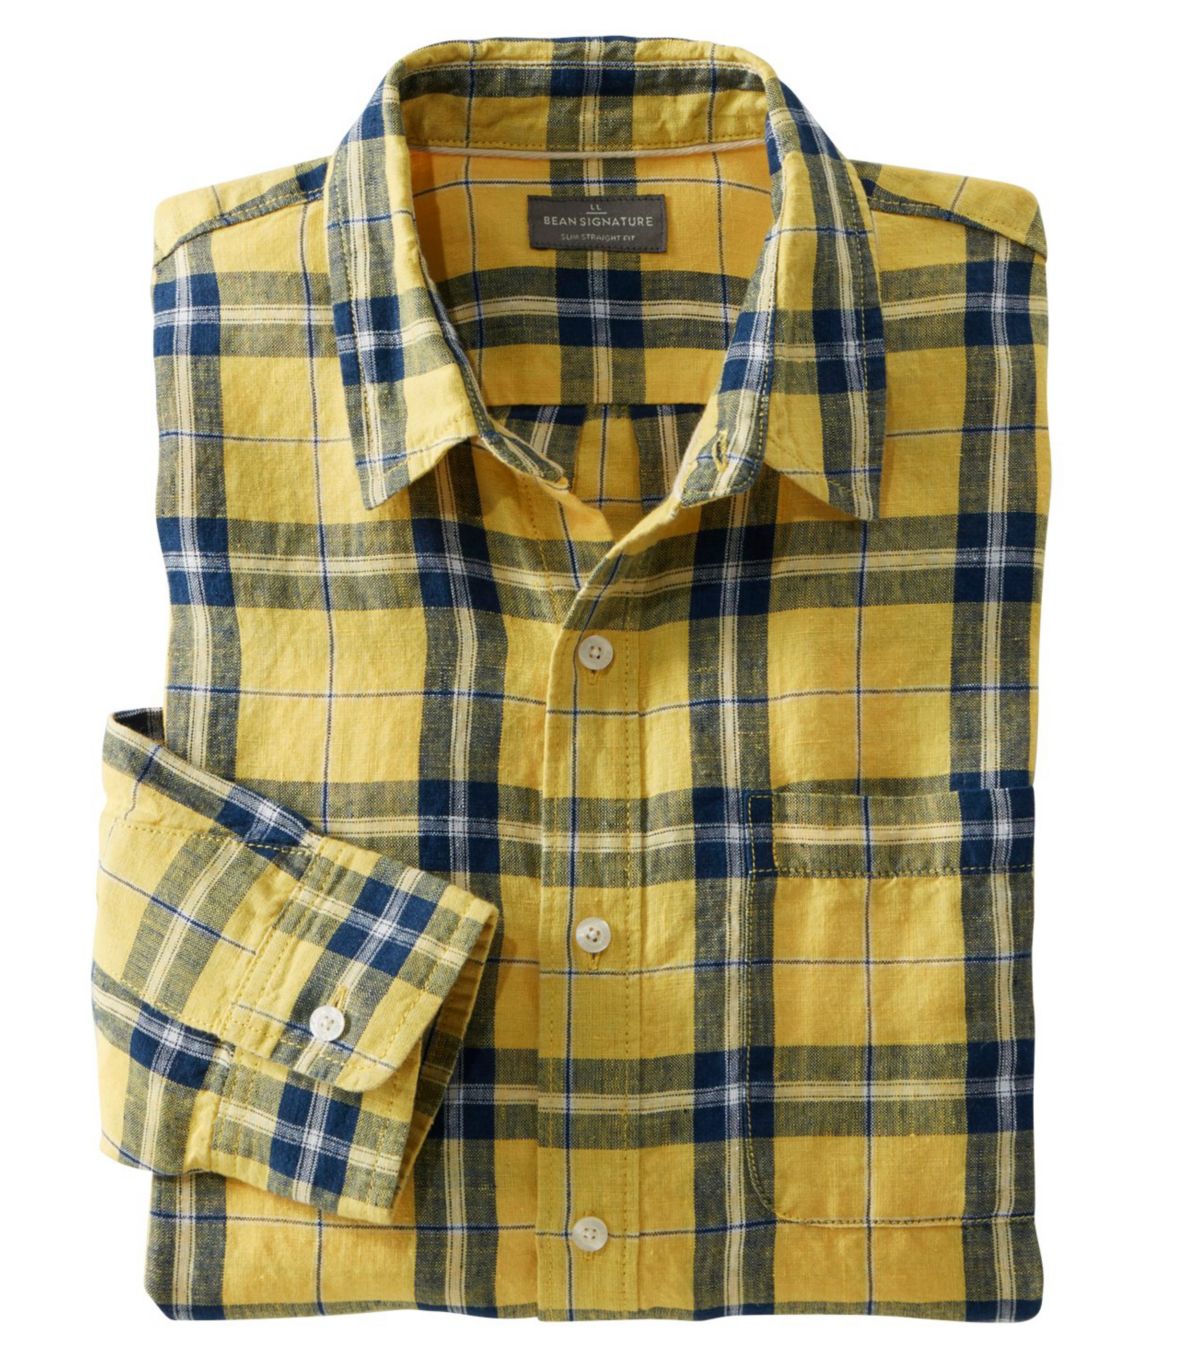 Men's Signature Linen Shirt, Long-Sleeve, Plaid